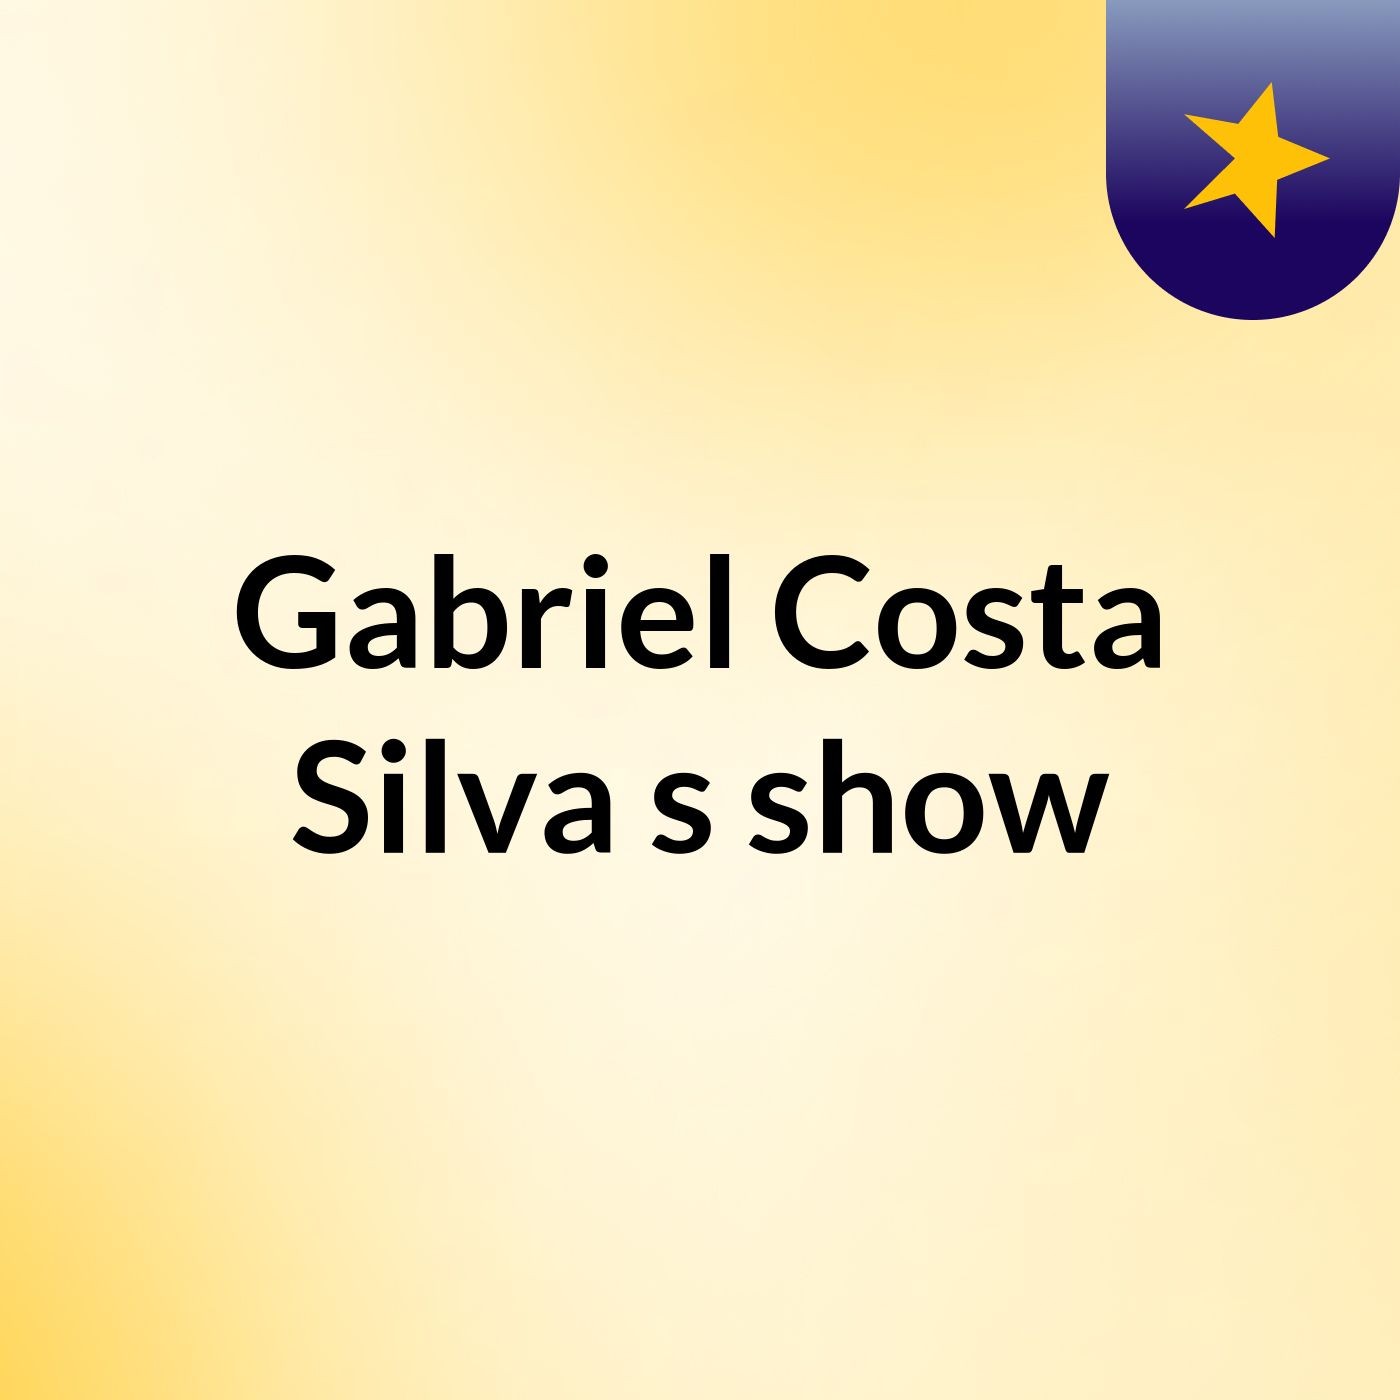 Gabriel Costa Silva's show